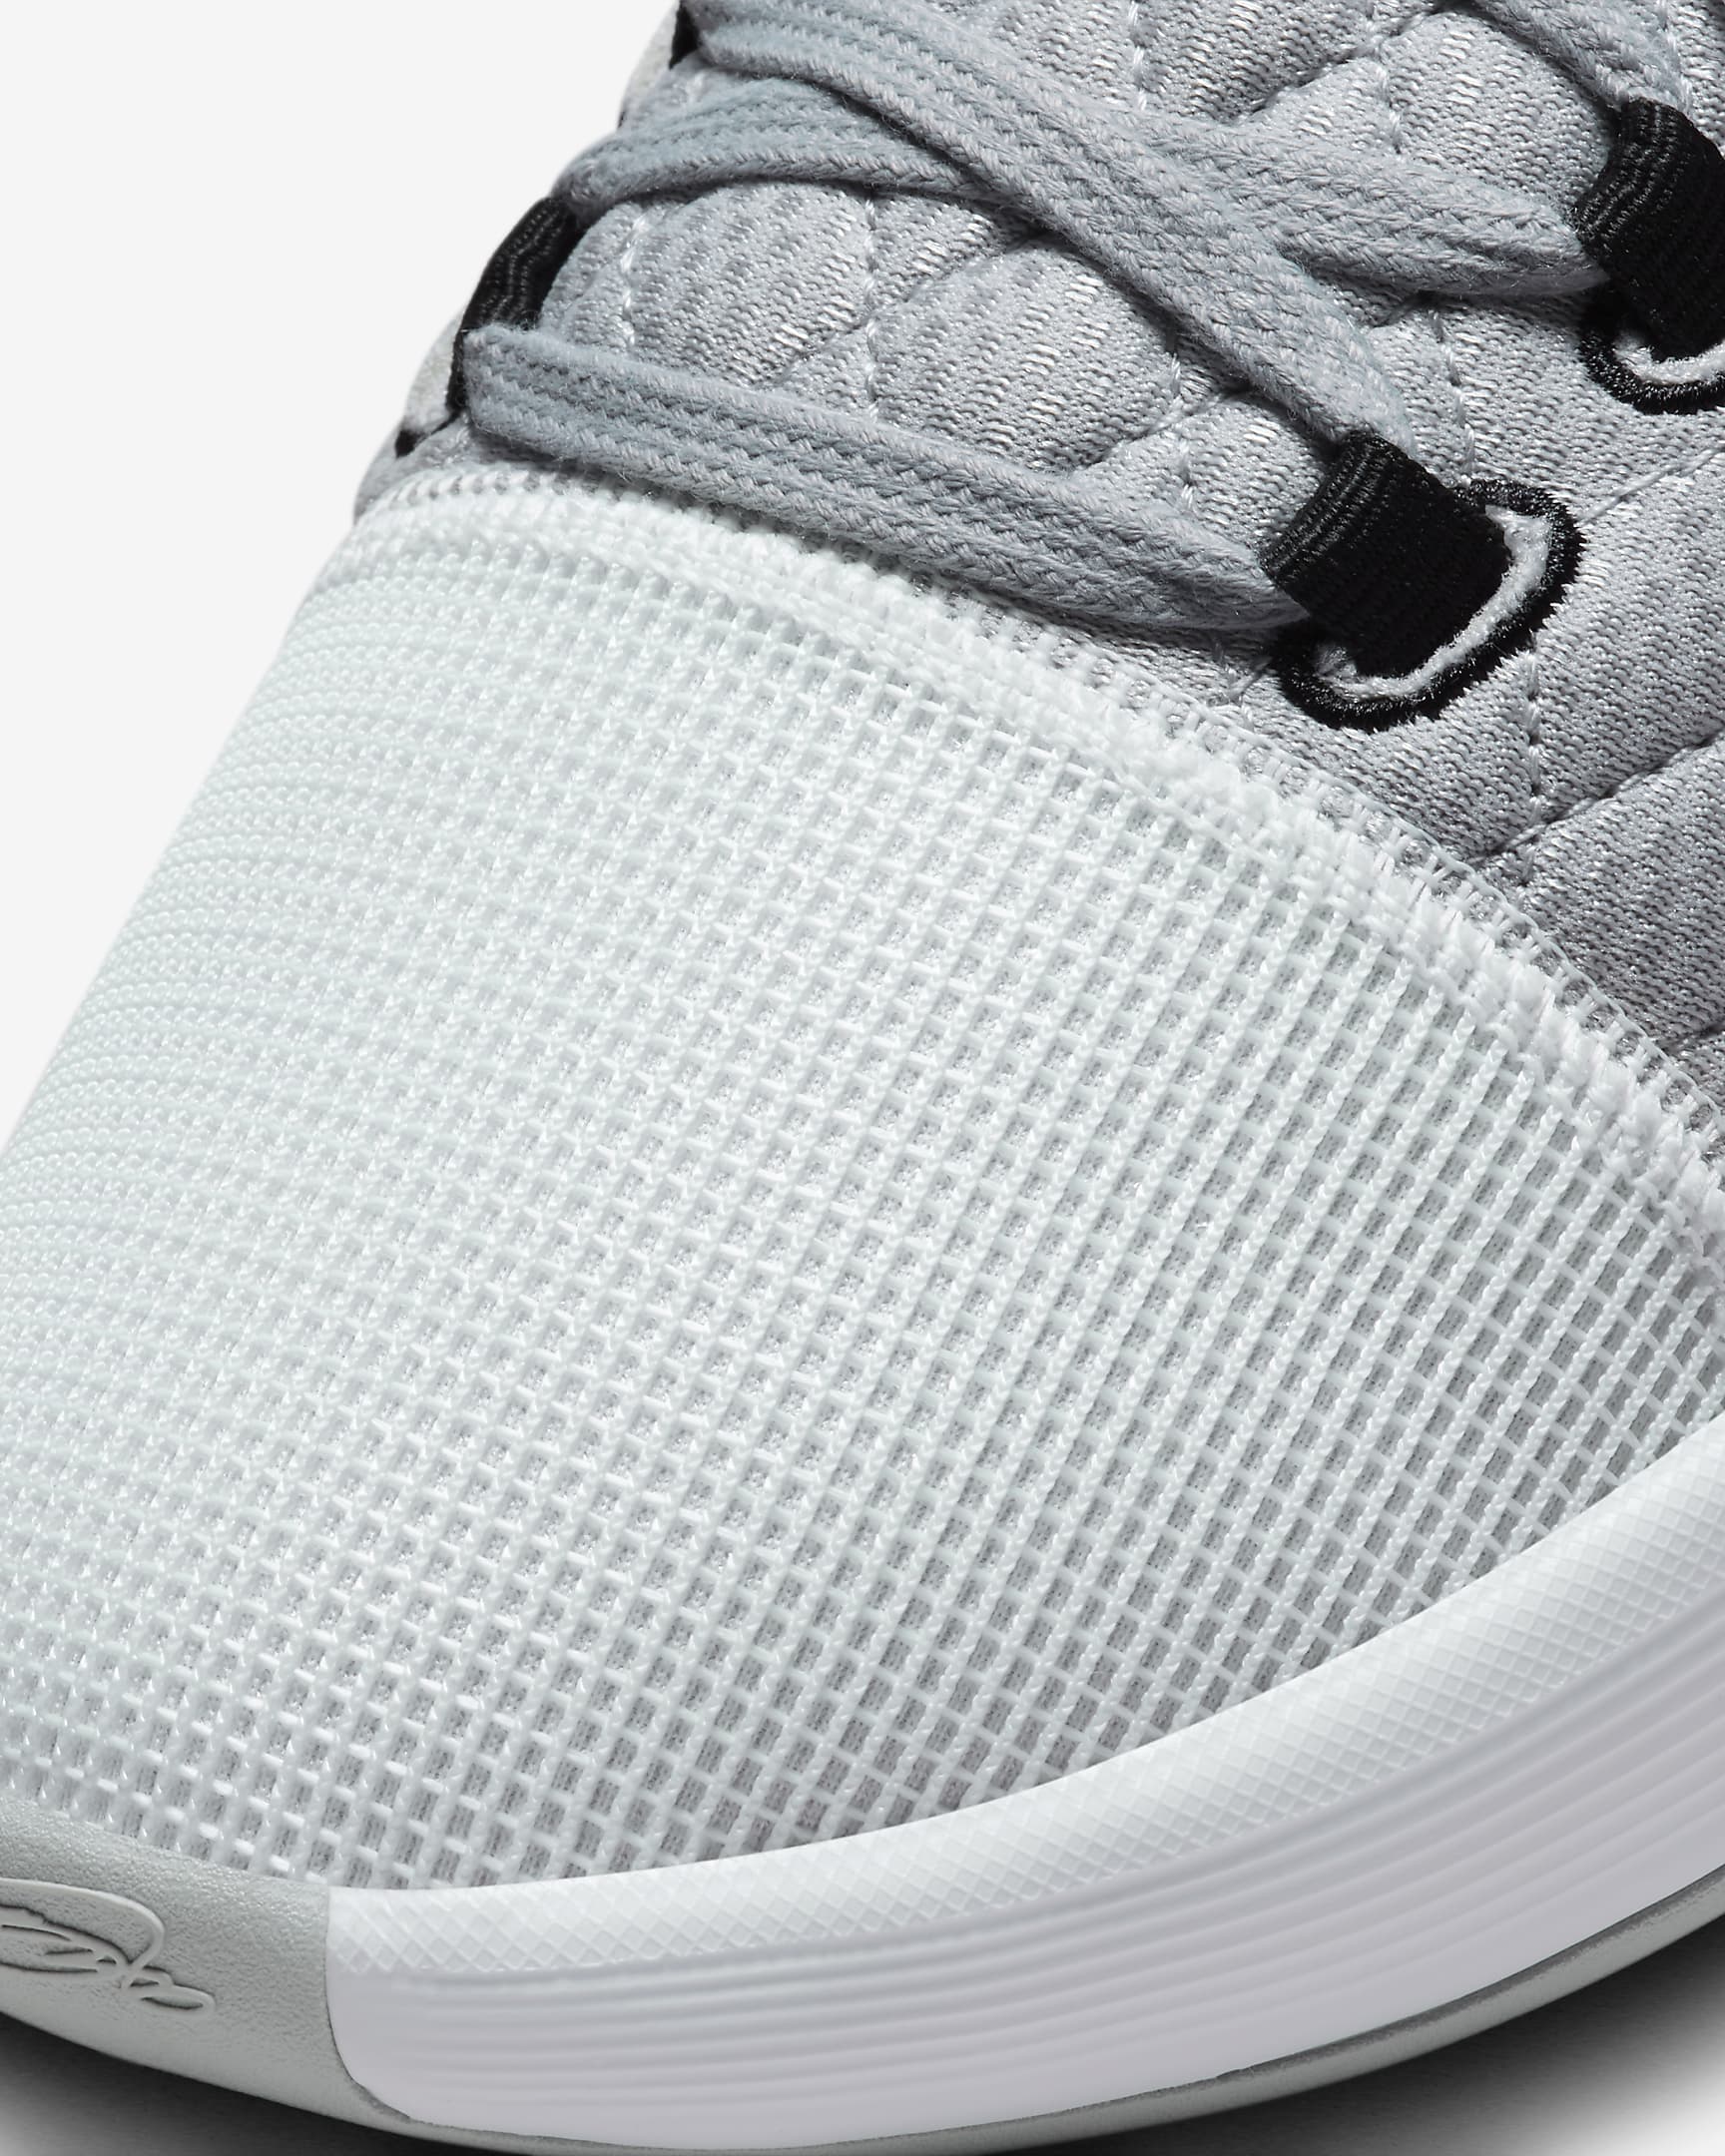 LeBron Witness 8 Basketball Shoes - White/Light Smoke Grey/Black